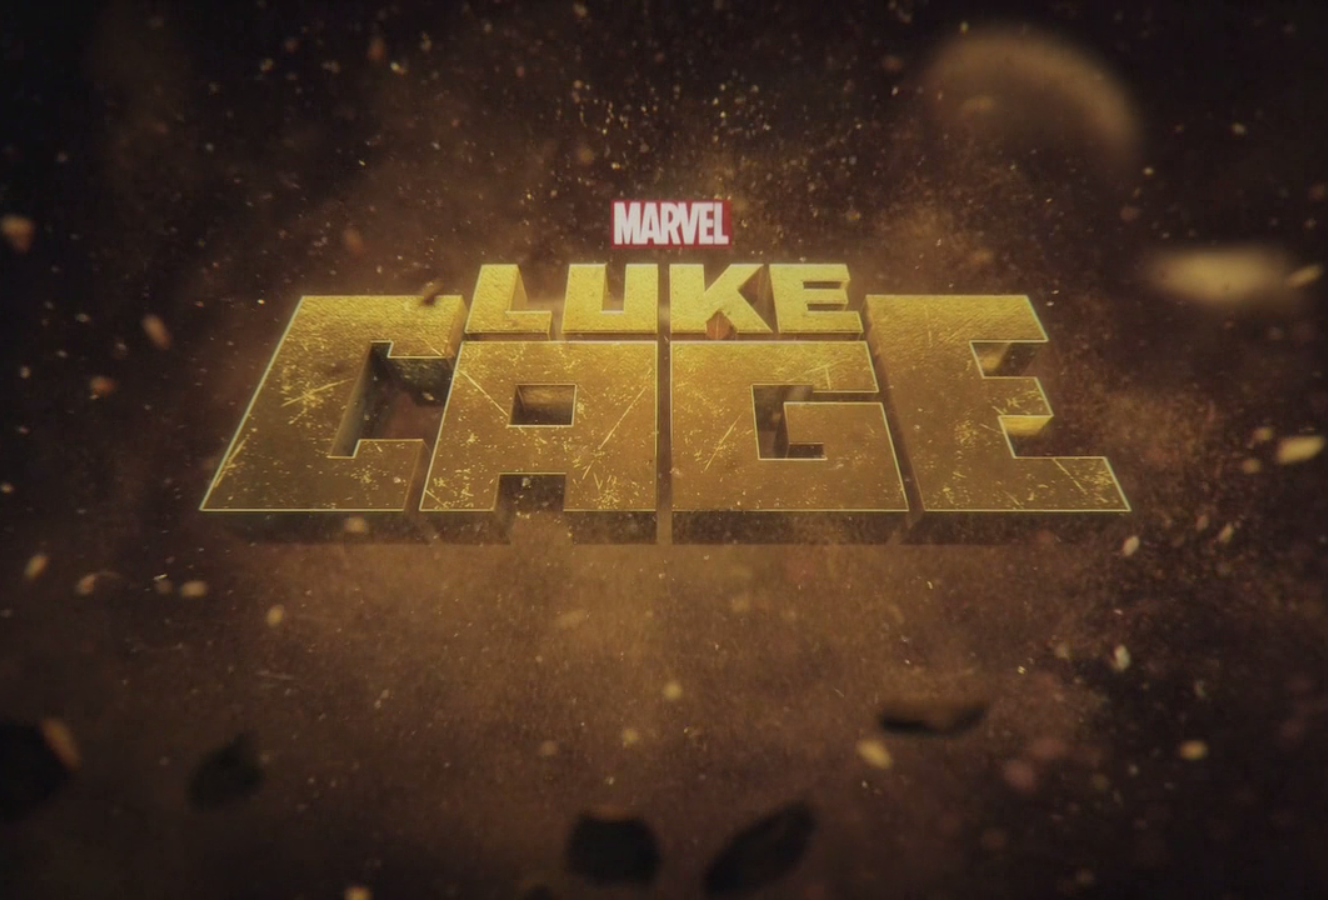 Luke cage s1 title card 3